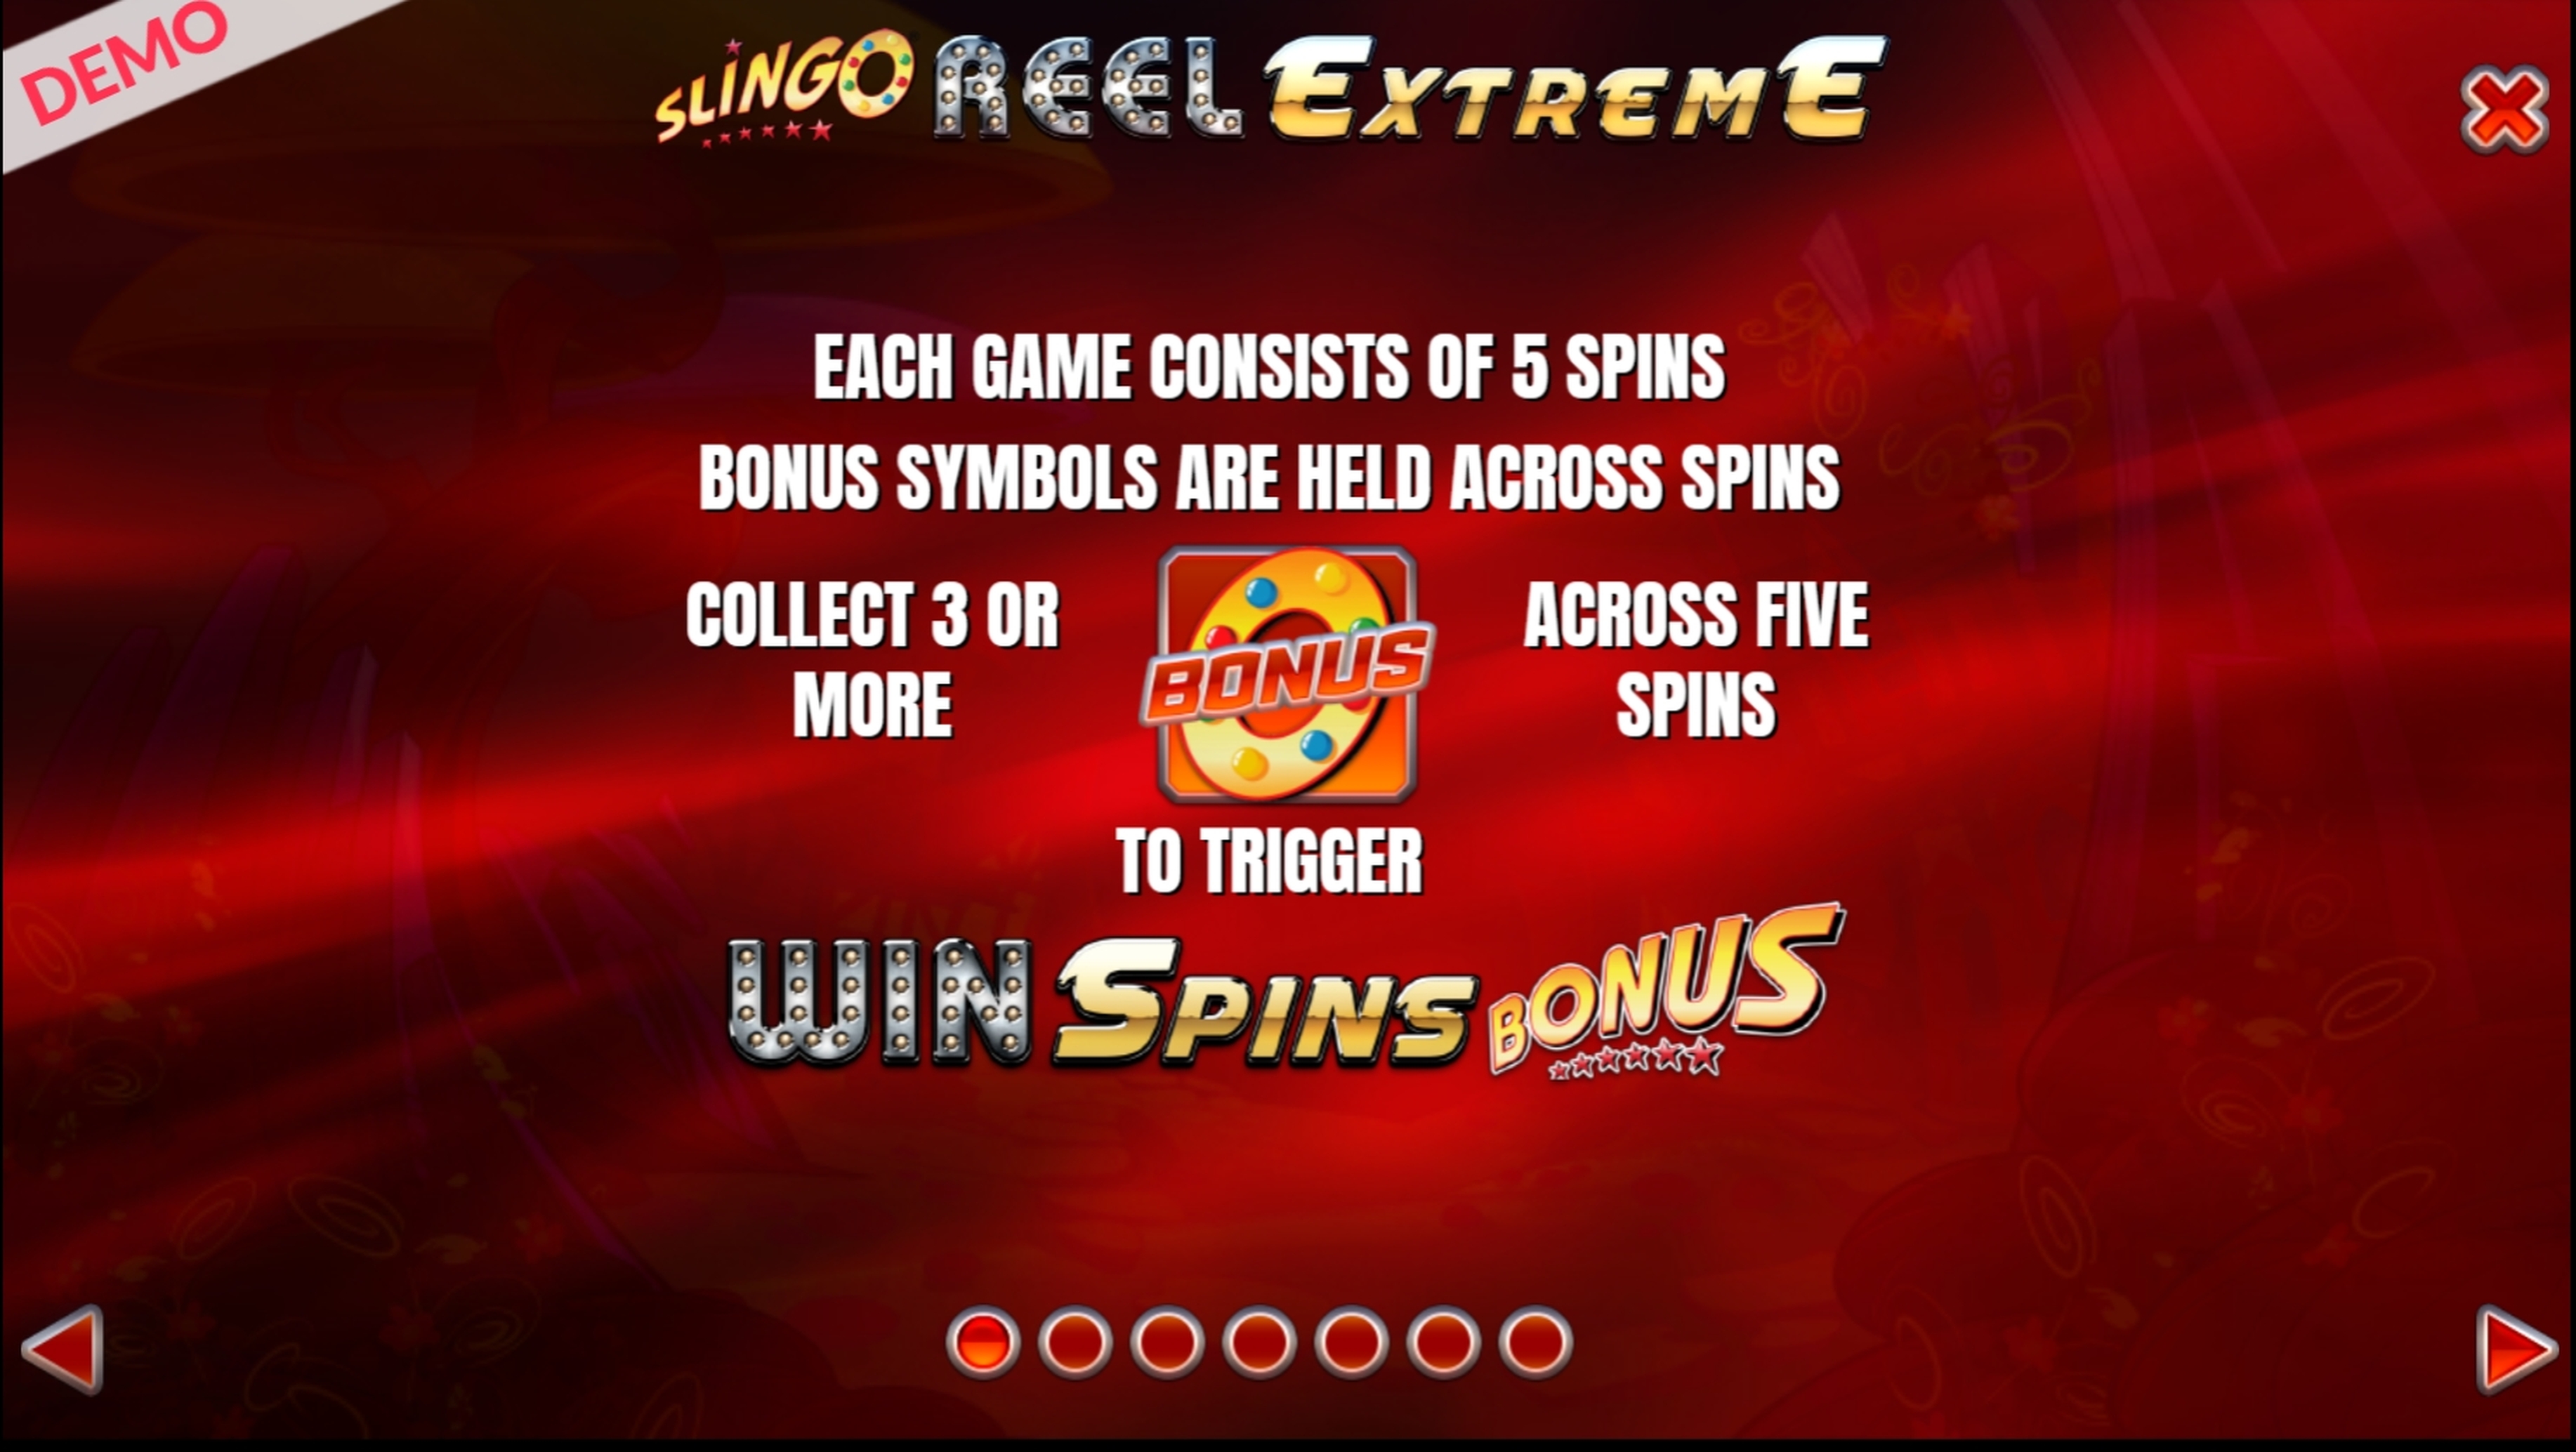 Info of Slingo Reel Extreme Slot Game by Slingo